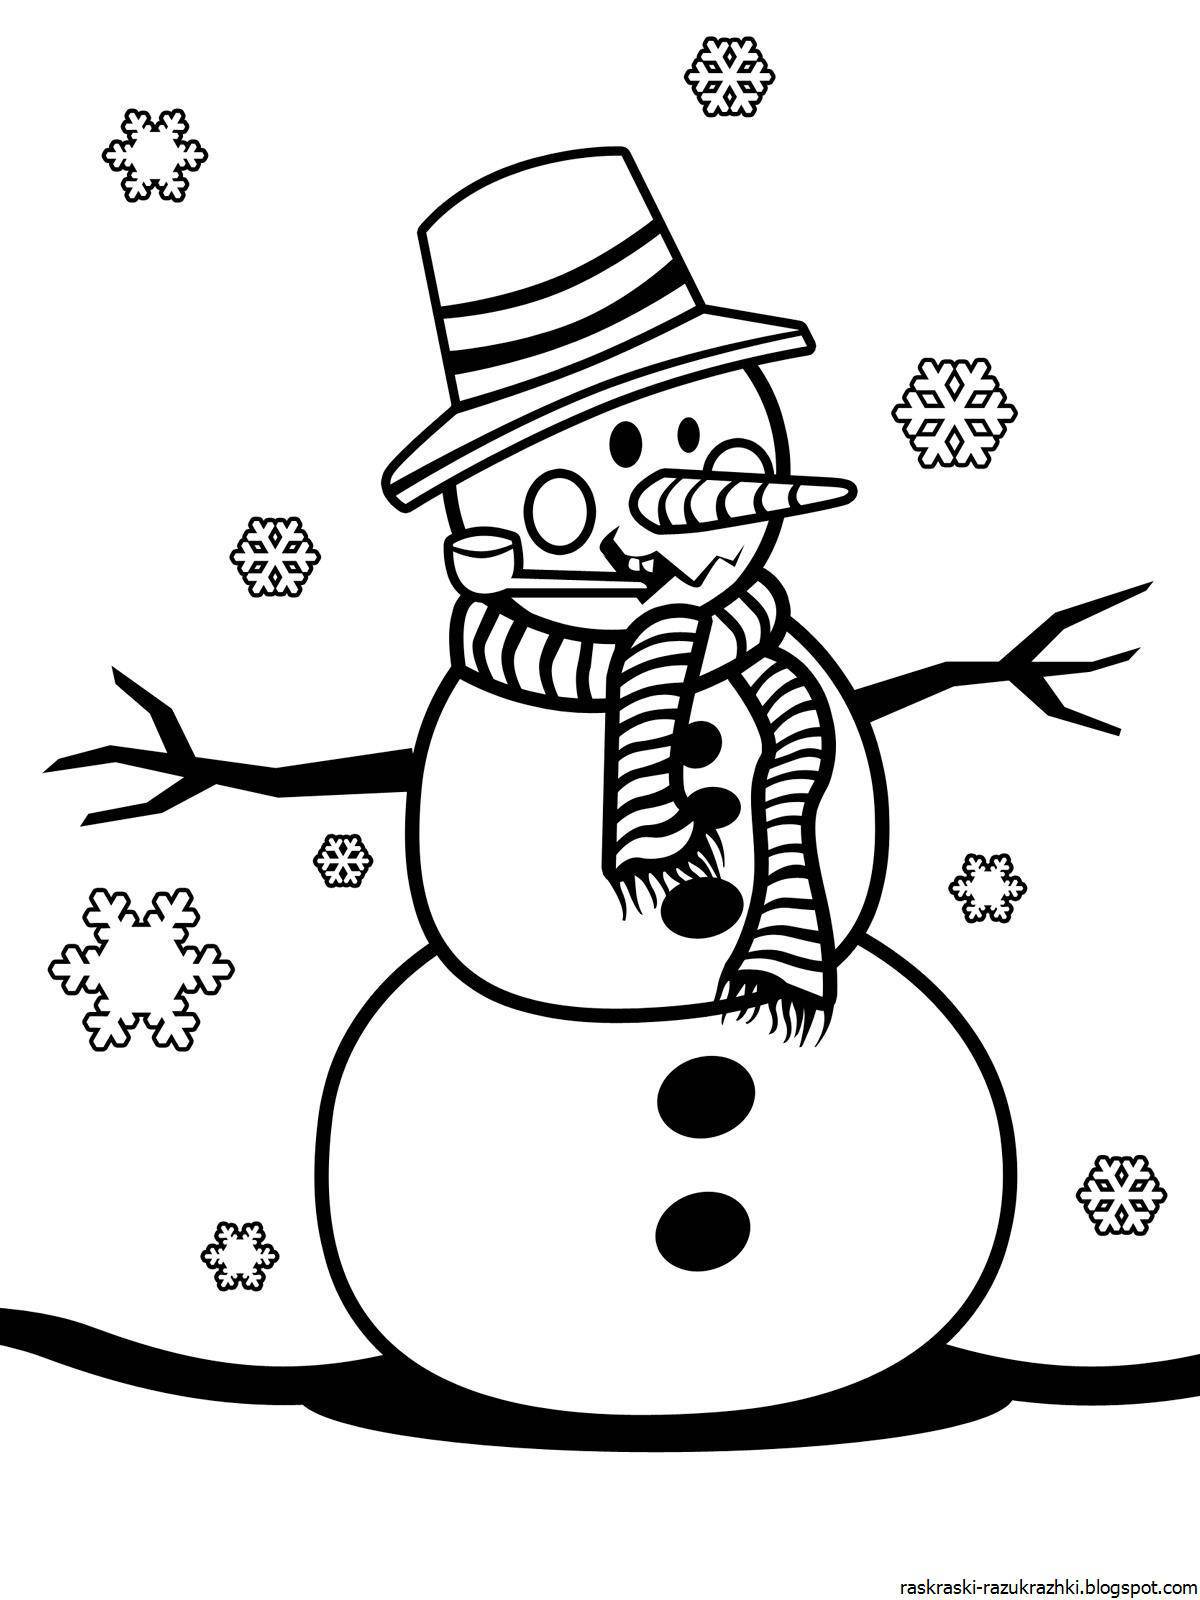 Children's snowman coloring book